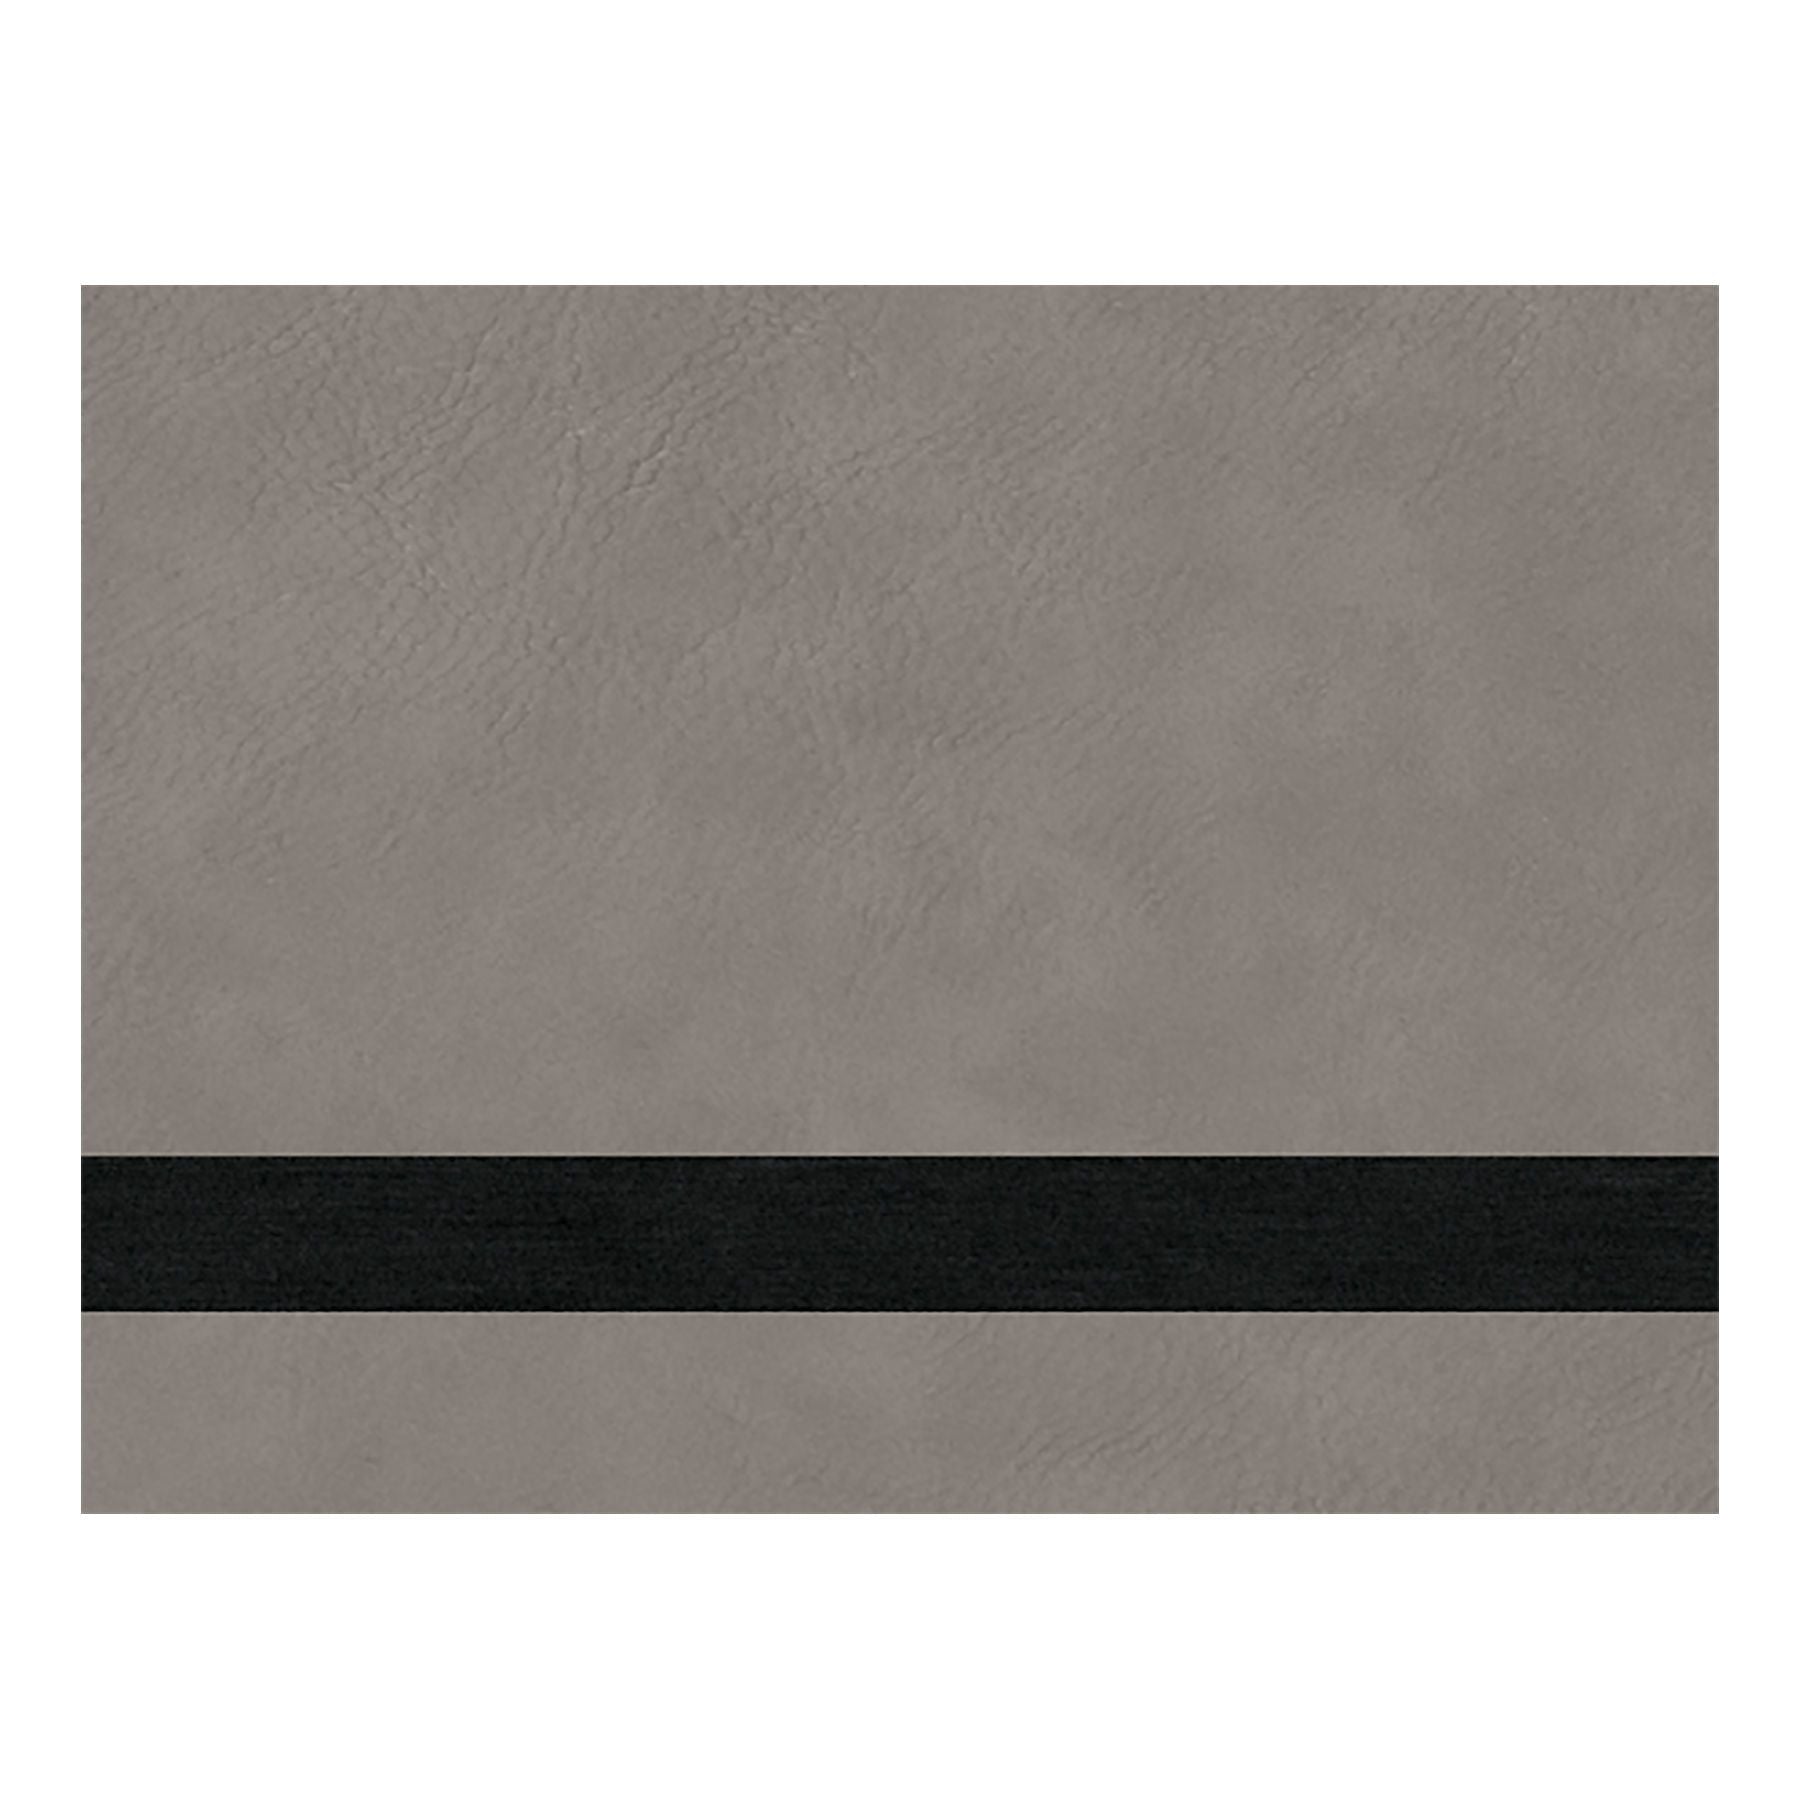 Leatherette Sheets 12 x 24 - Gray/Black – Houston Acrylic